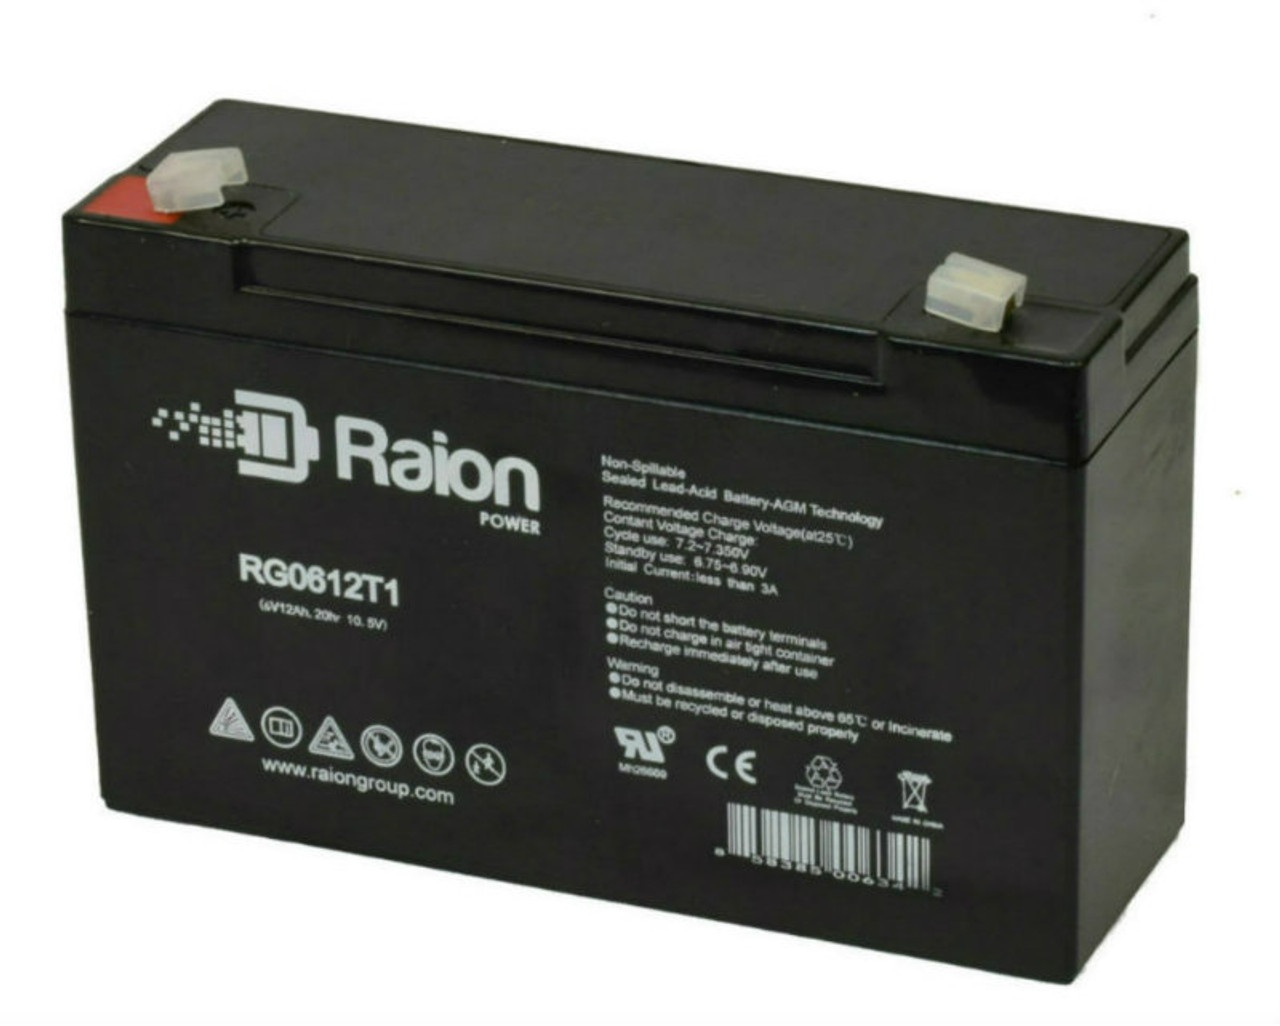 Raion Power RG06120T1 Replacement Emergency Light Battery for York-Wide Light D2E1C